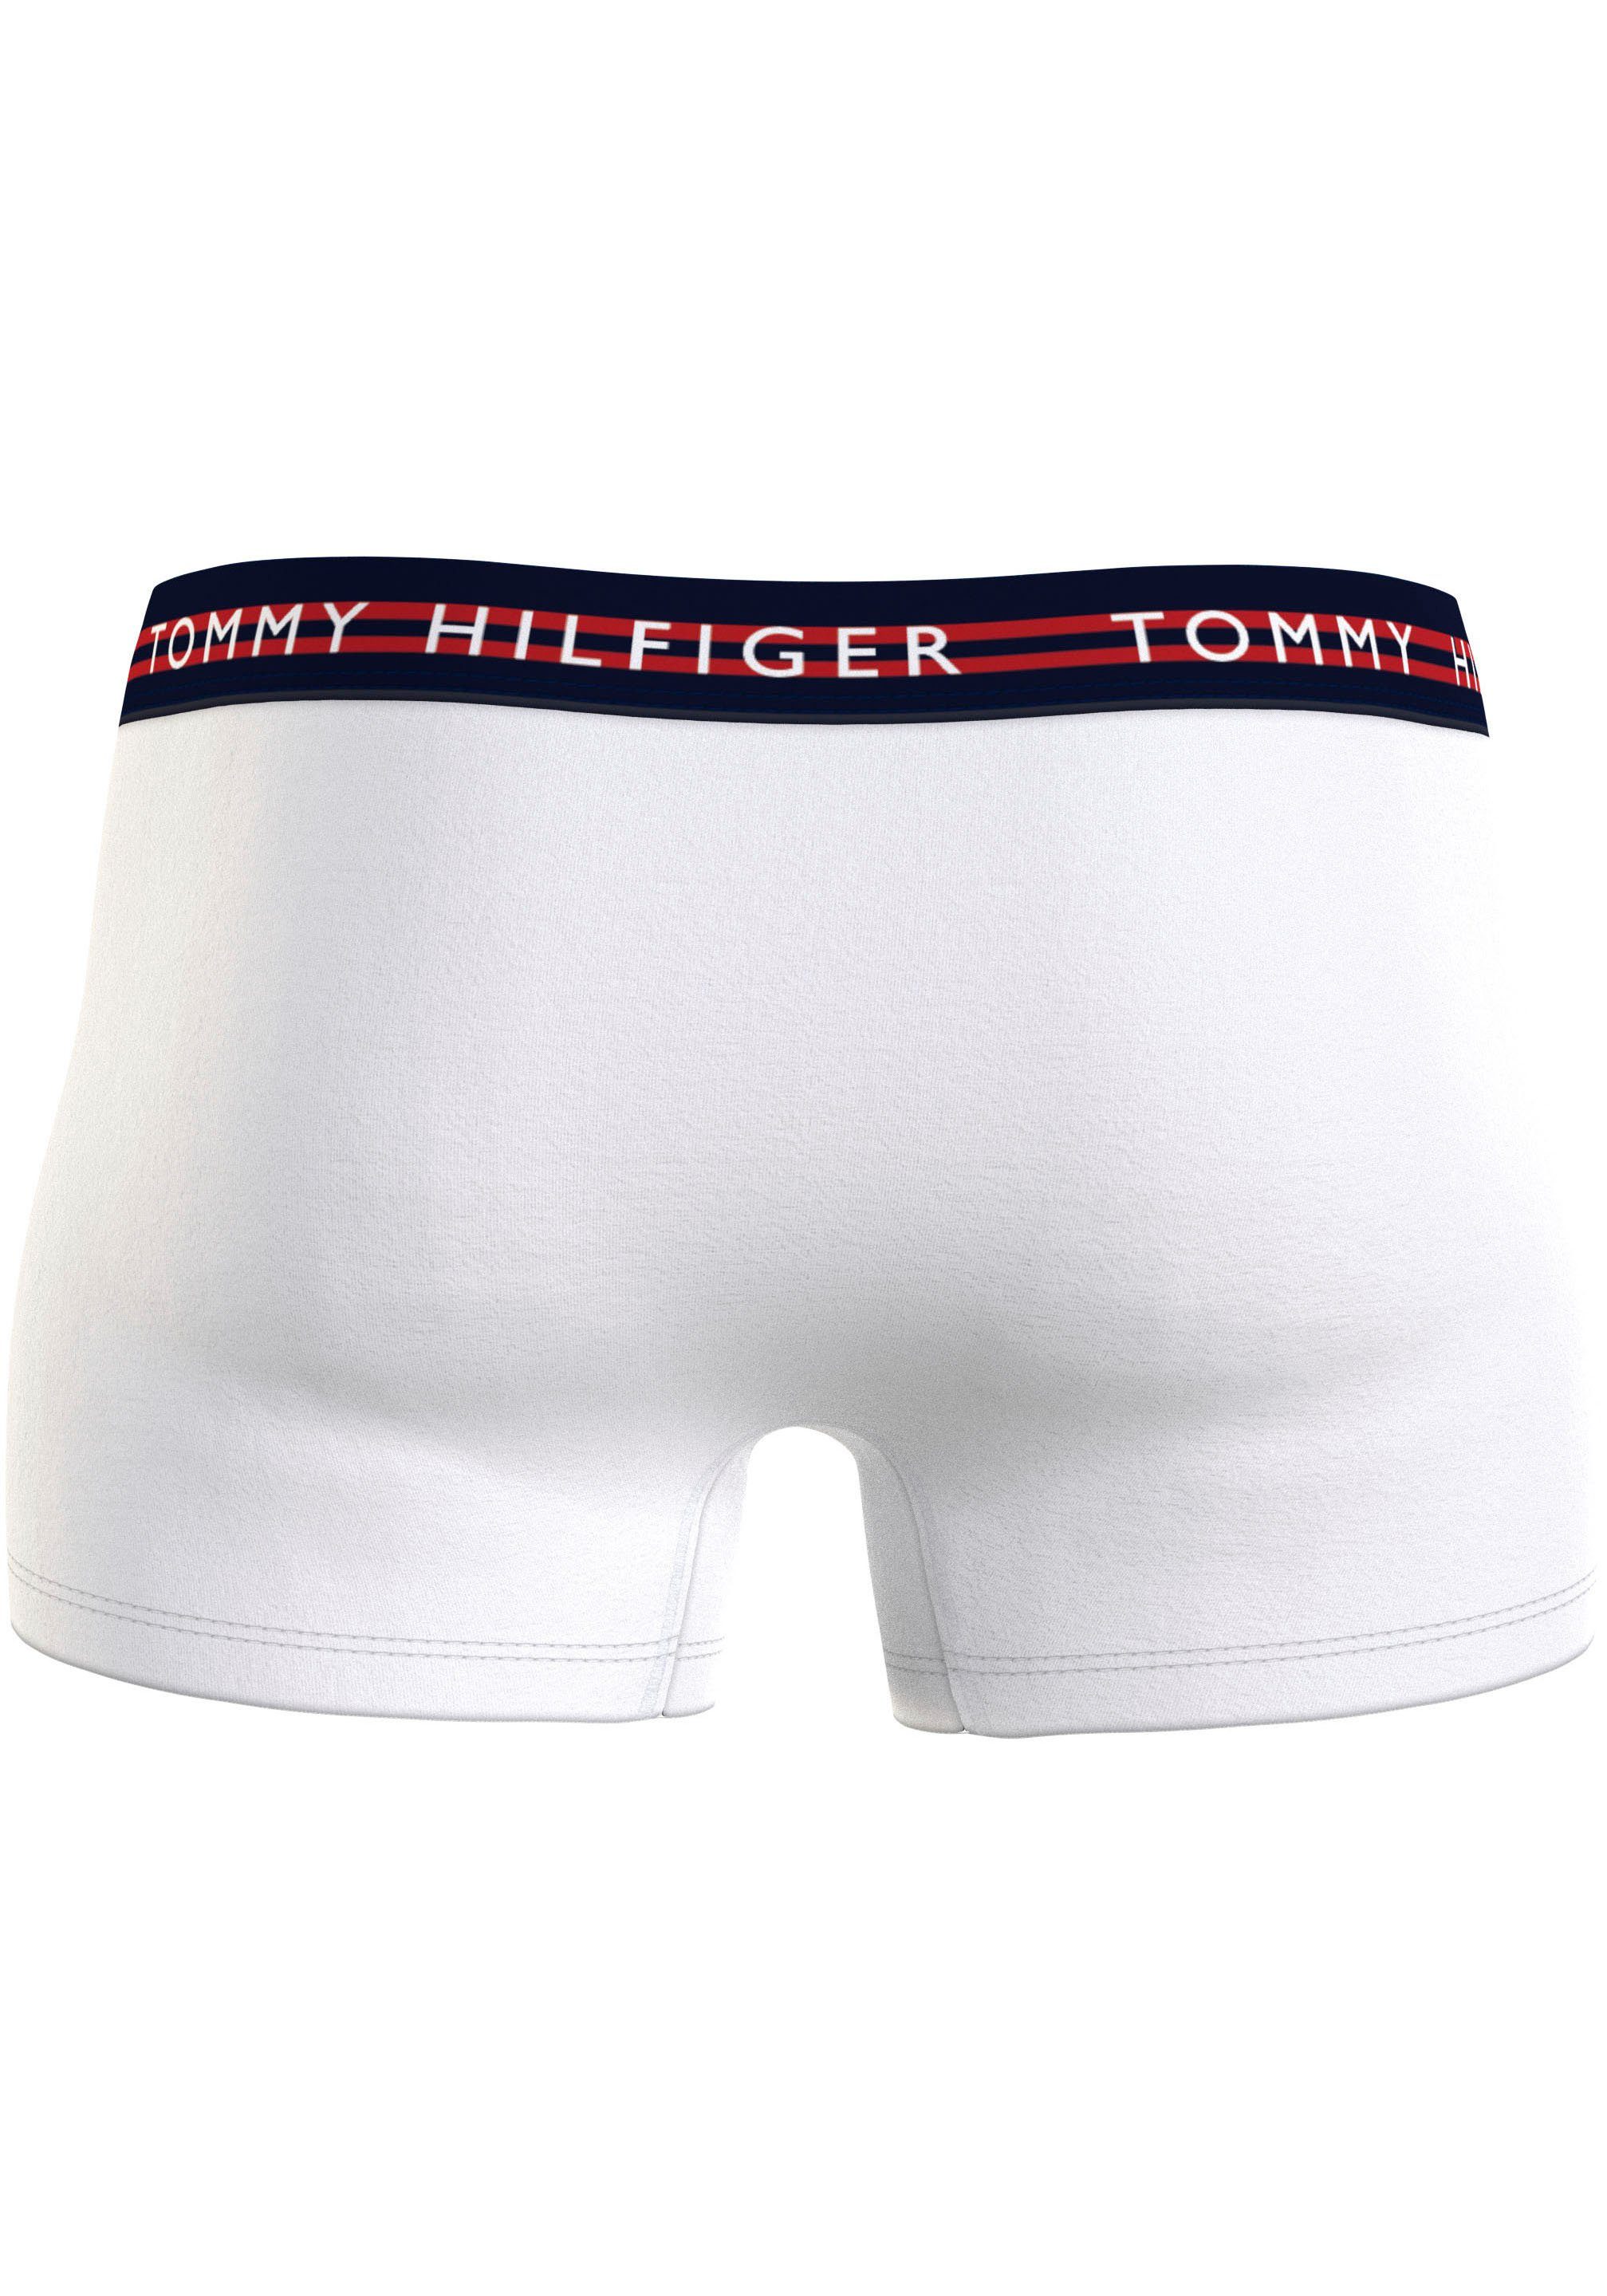 WB am Boxershorts DIFF Hilfiger Taillenbund 3er-Pack) (Packung, TRUNK COLOR Underwear red/white/desert mit sky Logo BODY + Tommy 3P